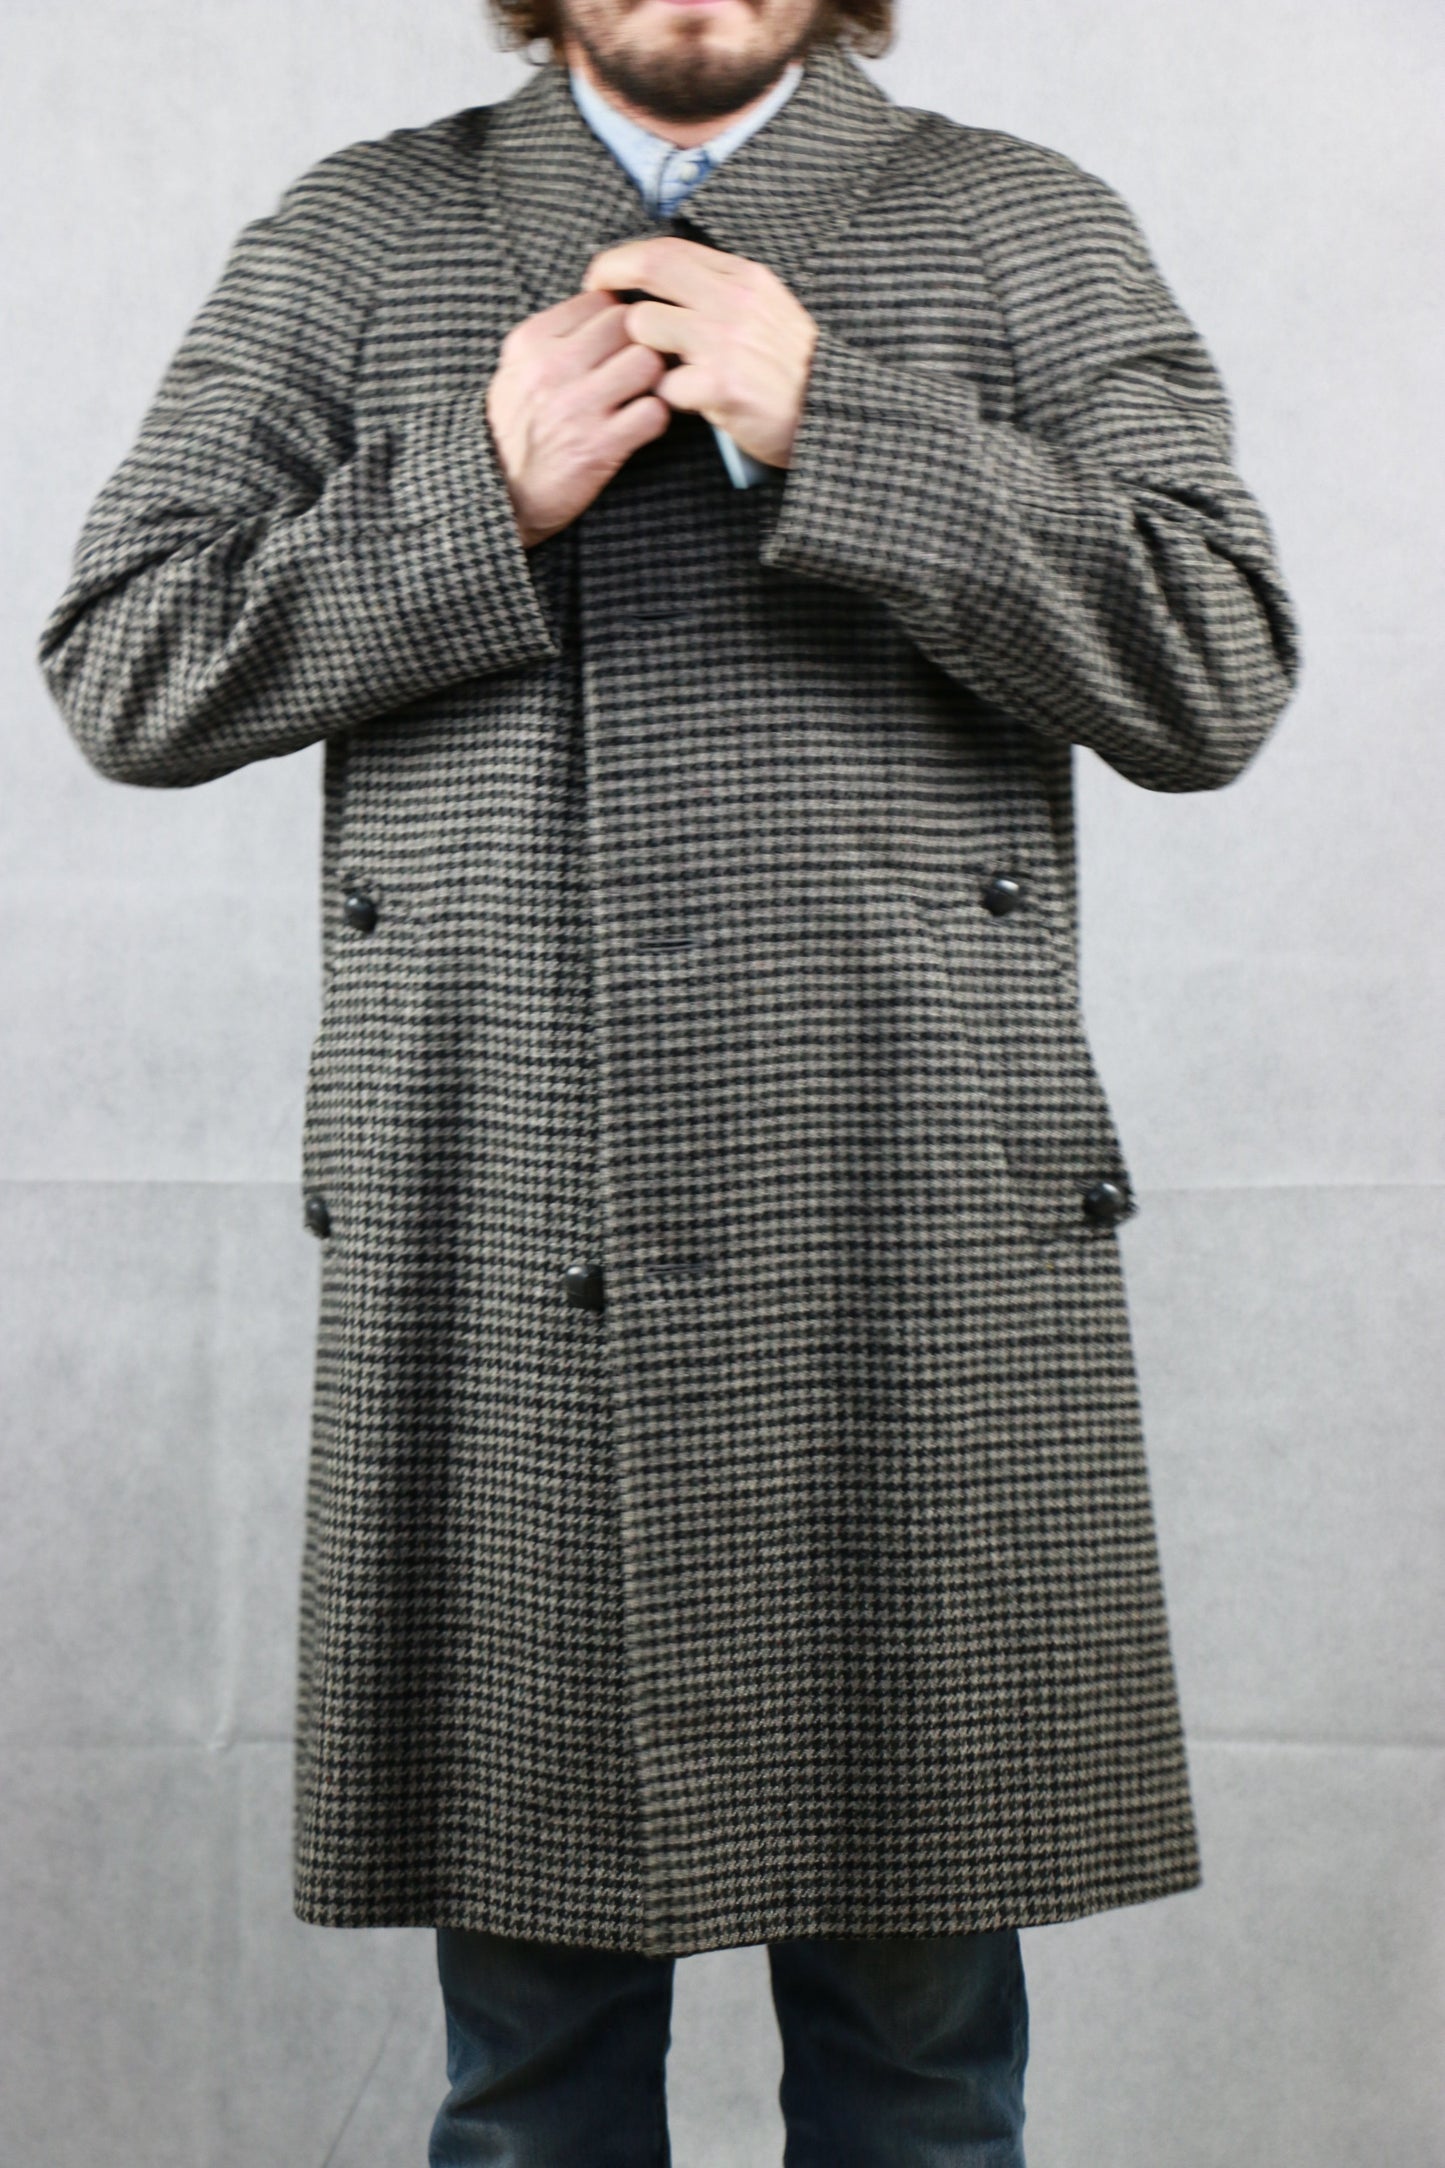 Aquascutum Checkered Tweed Coat - clothing vintage clochard92.com